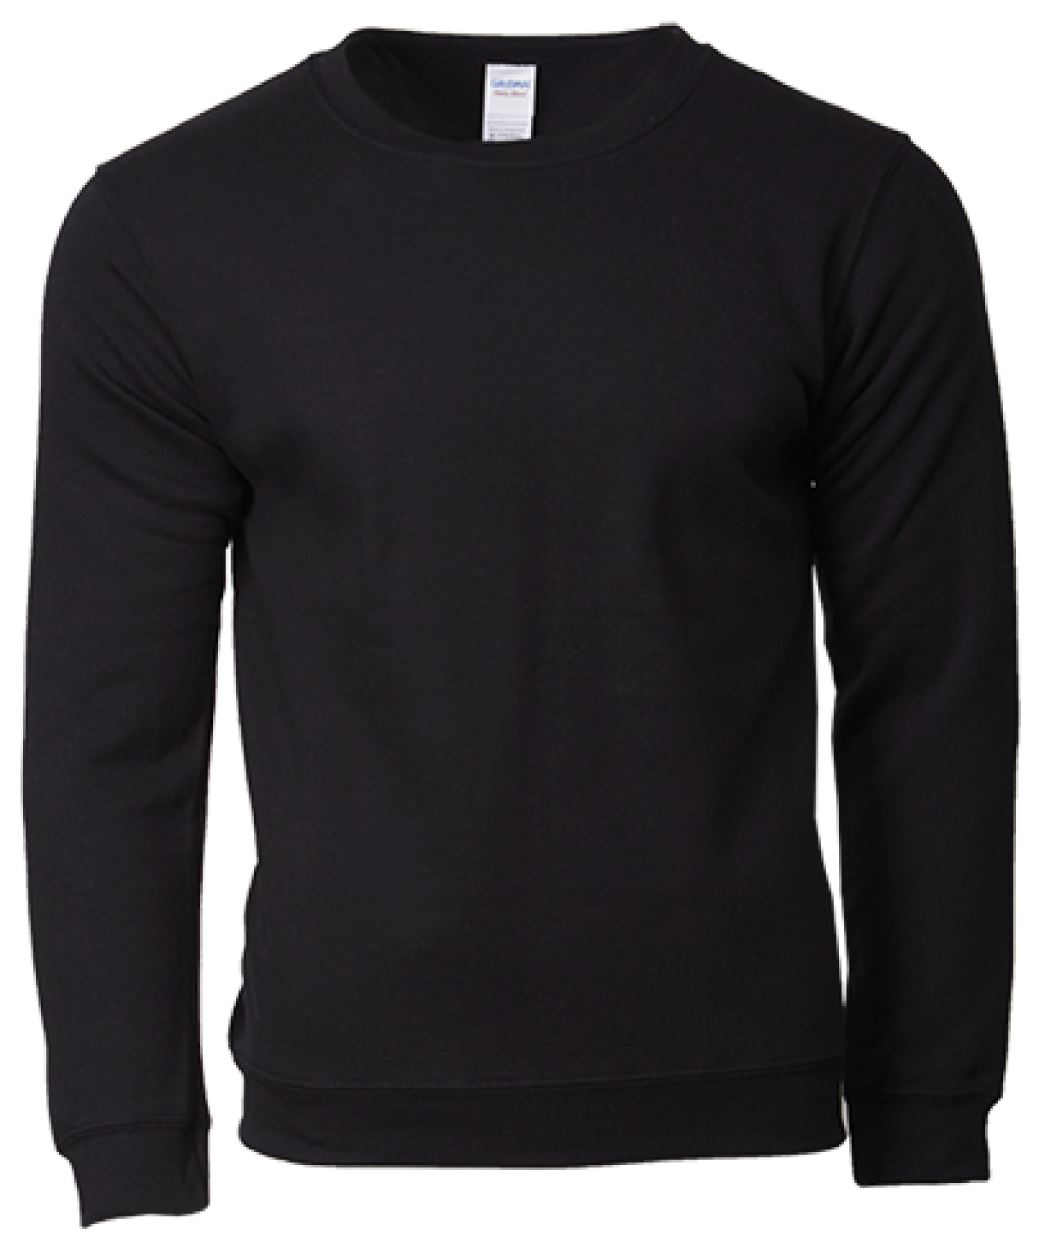 Gildan Heavy Blend 88000 285GSM Adult Unisex Crewneck Sweatshirt Cotton Polyester Sweater Group B BLACK/DARK HEATHER/SPORT GREY/RED 88000